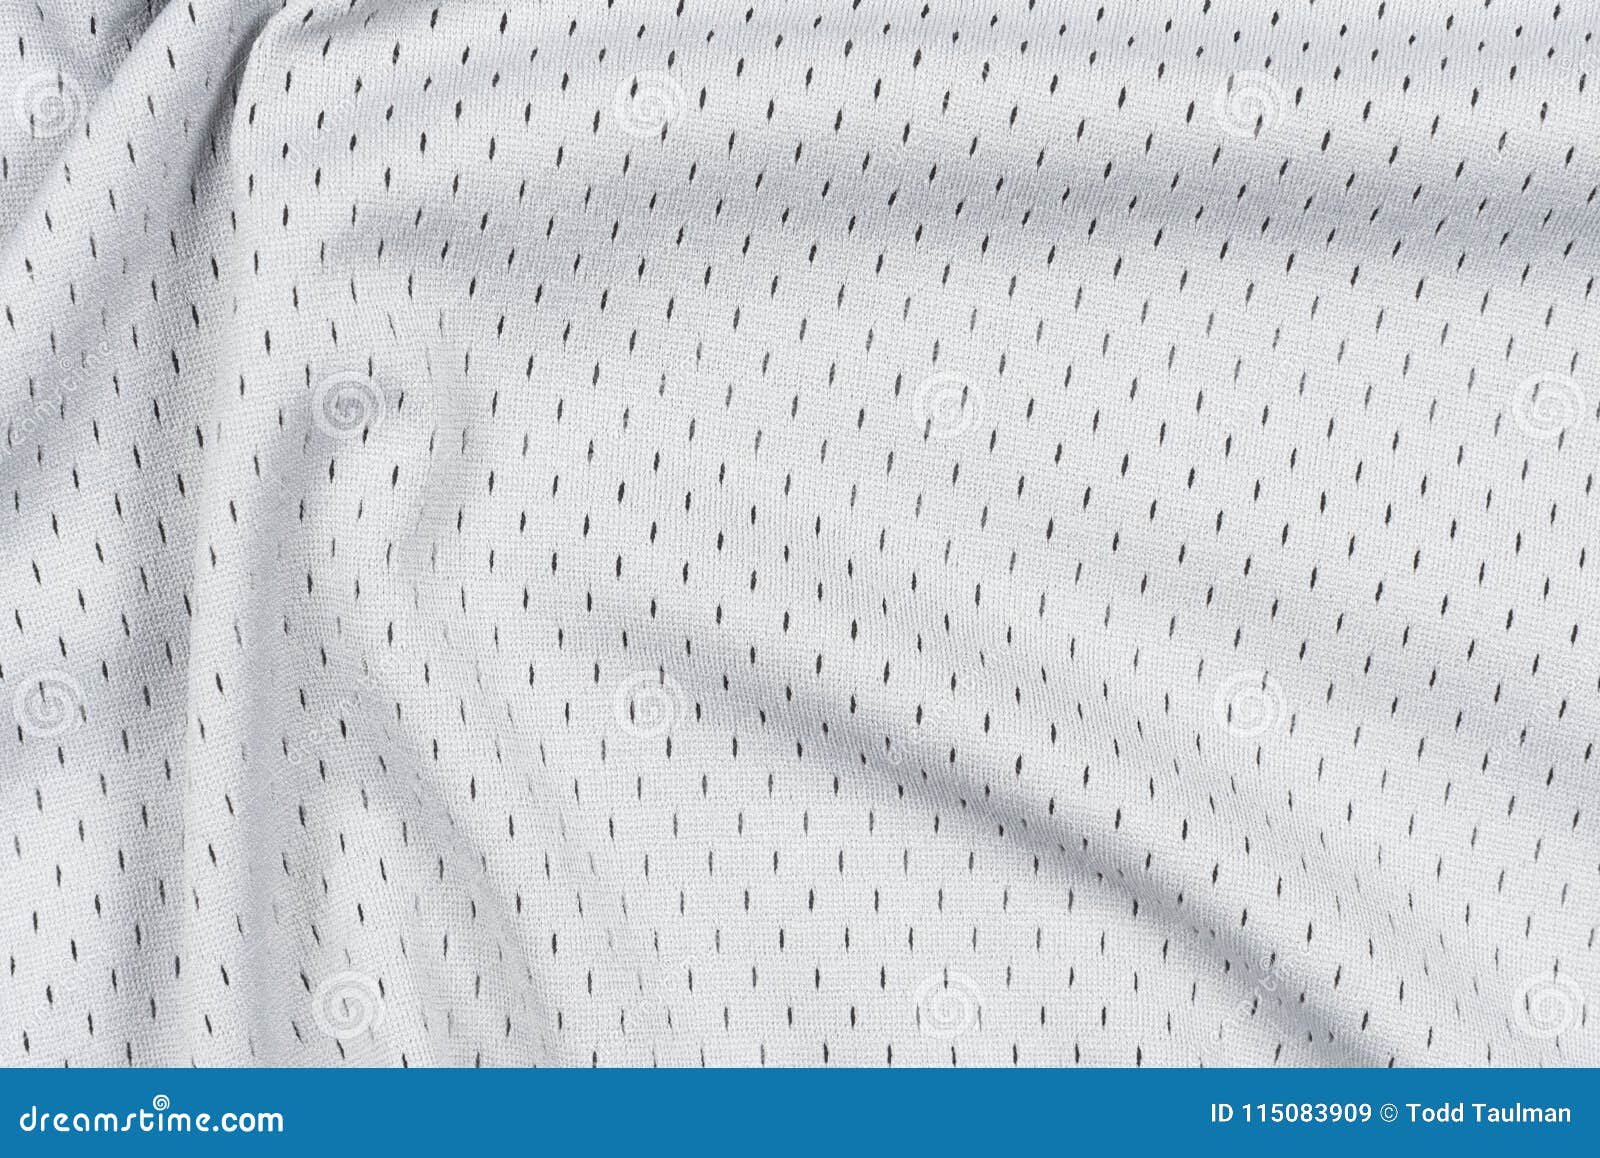 Jersey Fabric Background Stock Photography | CartoonDealer.com #73701800